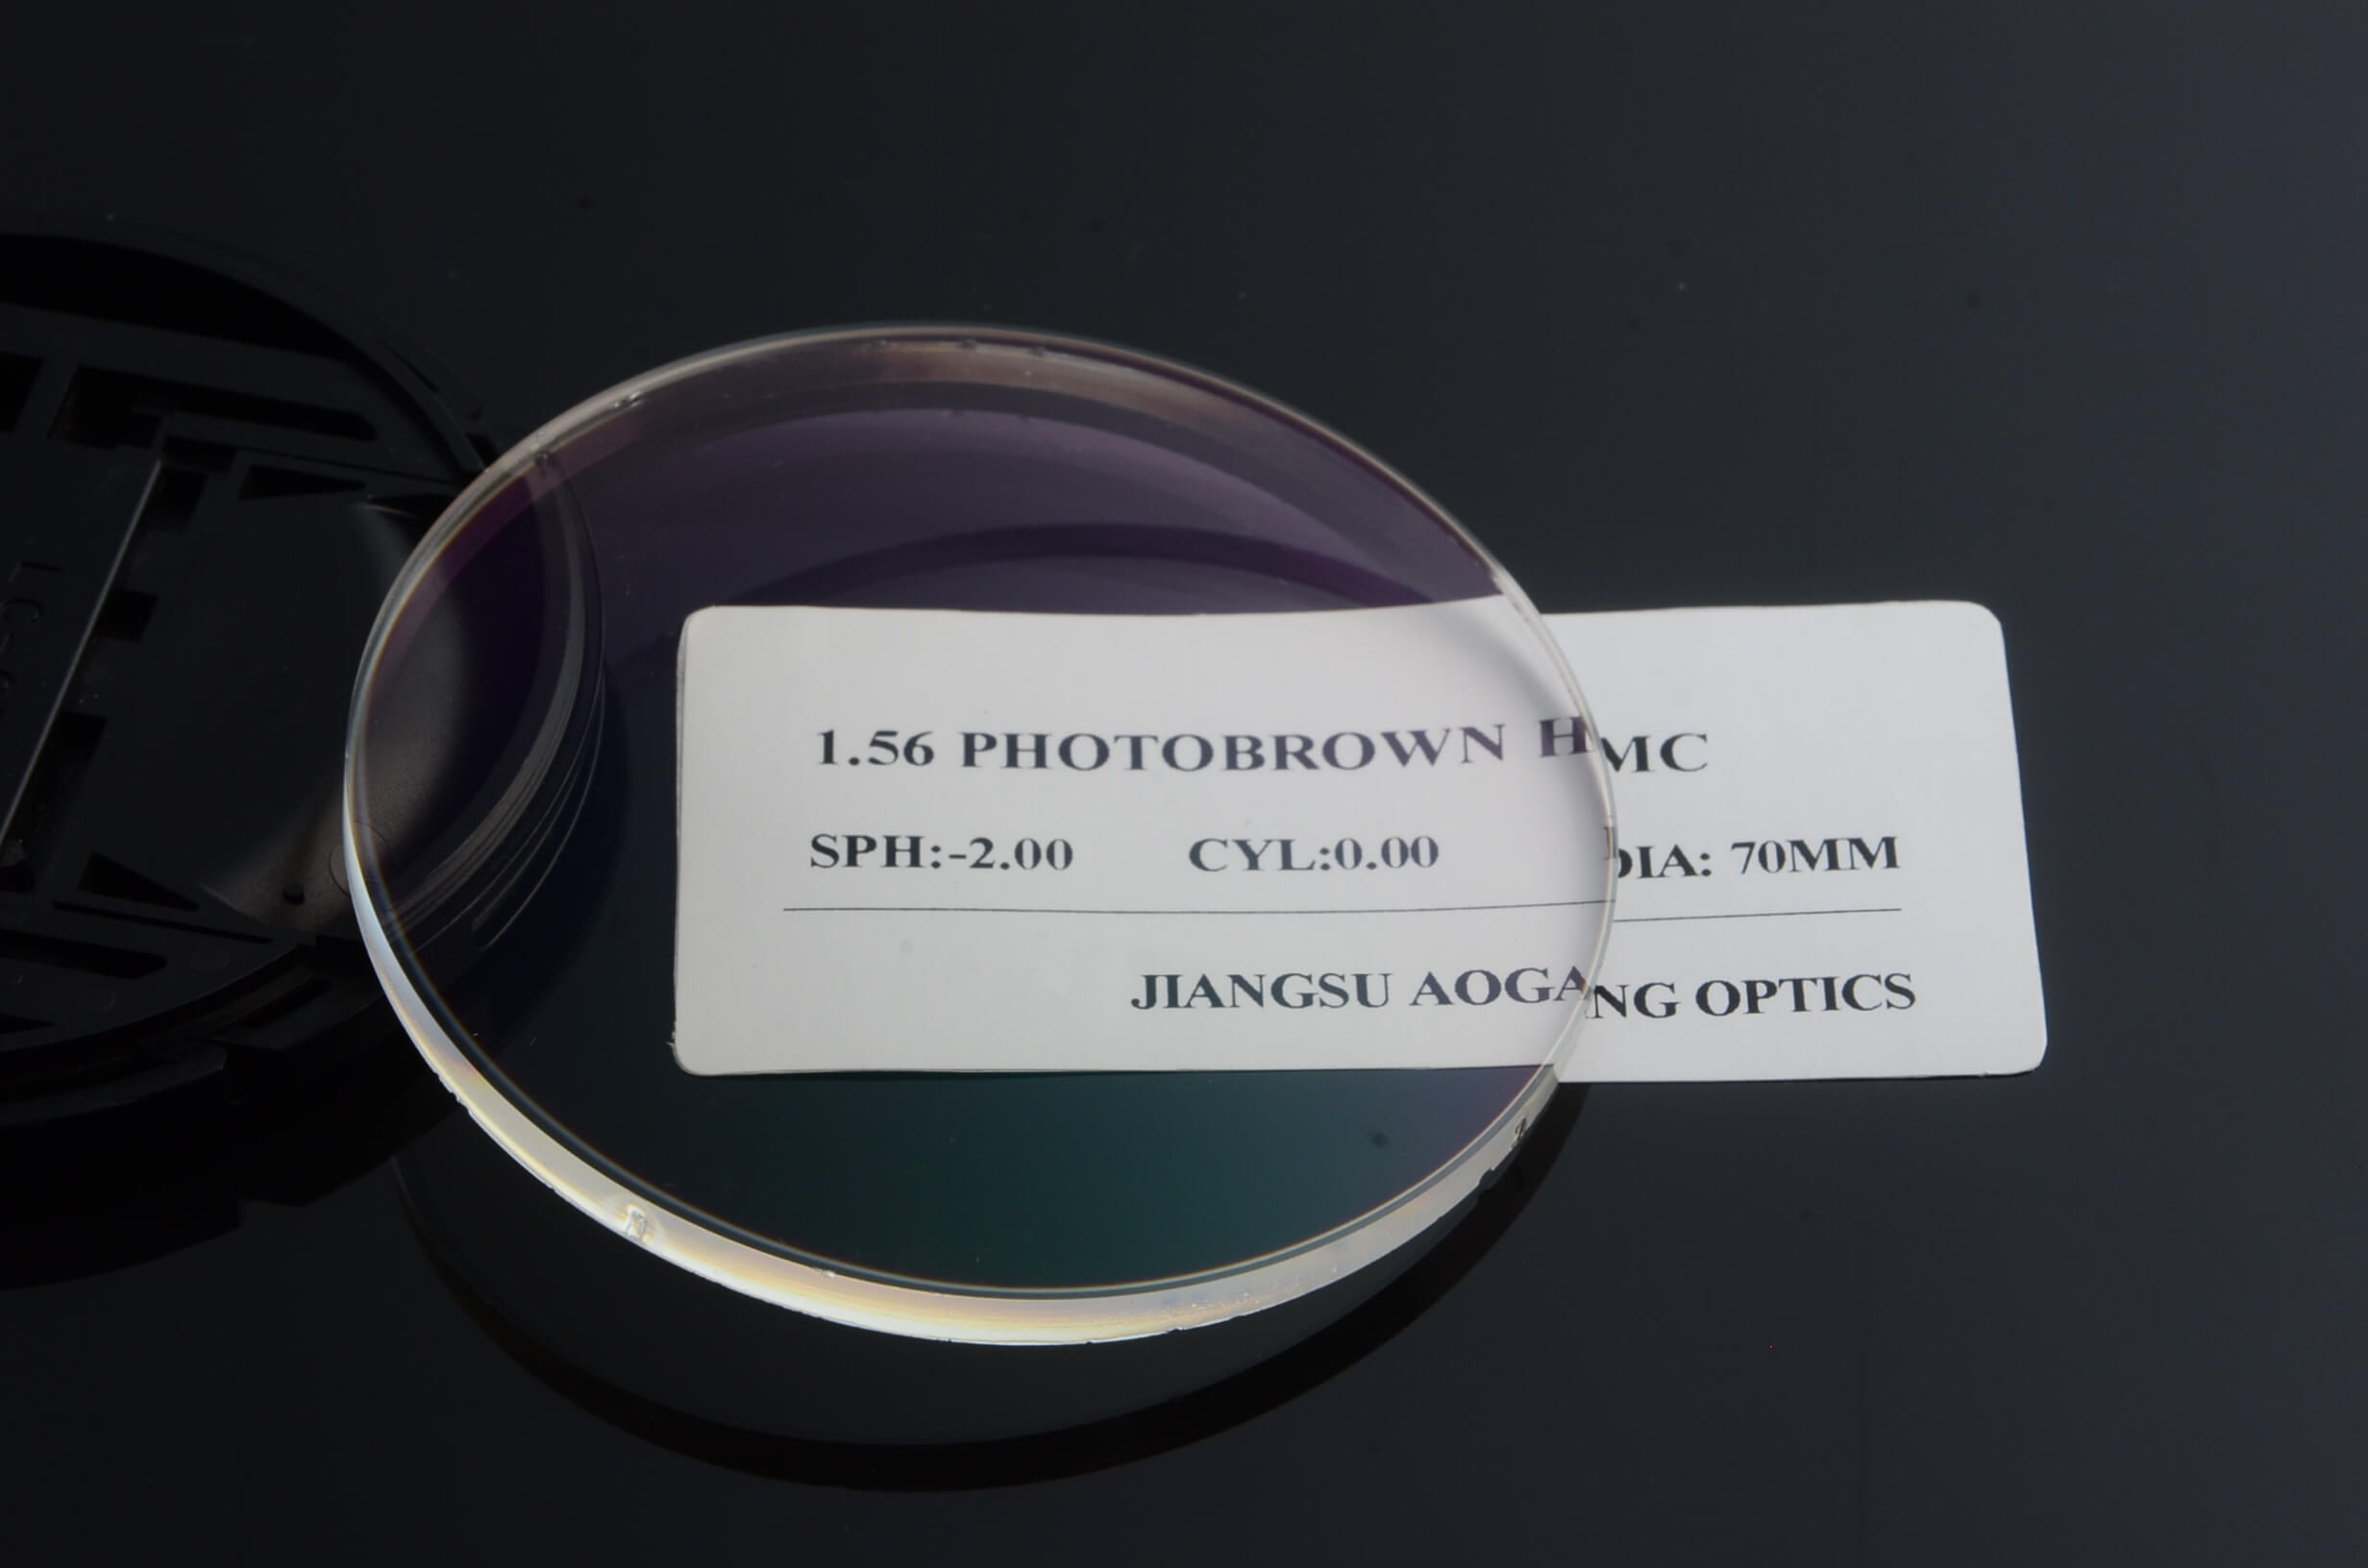 Index 1.56 photochromic photo grey HMC AR transition ophthalmic lens optical prescription anti reflection 